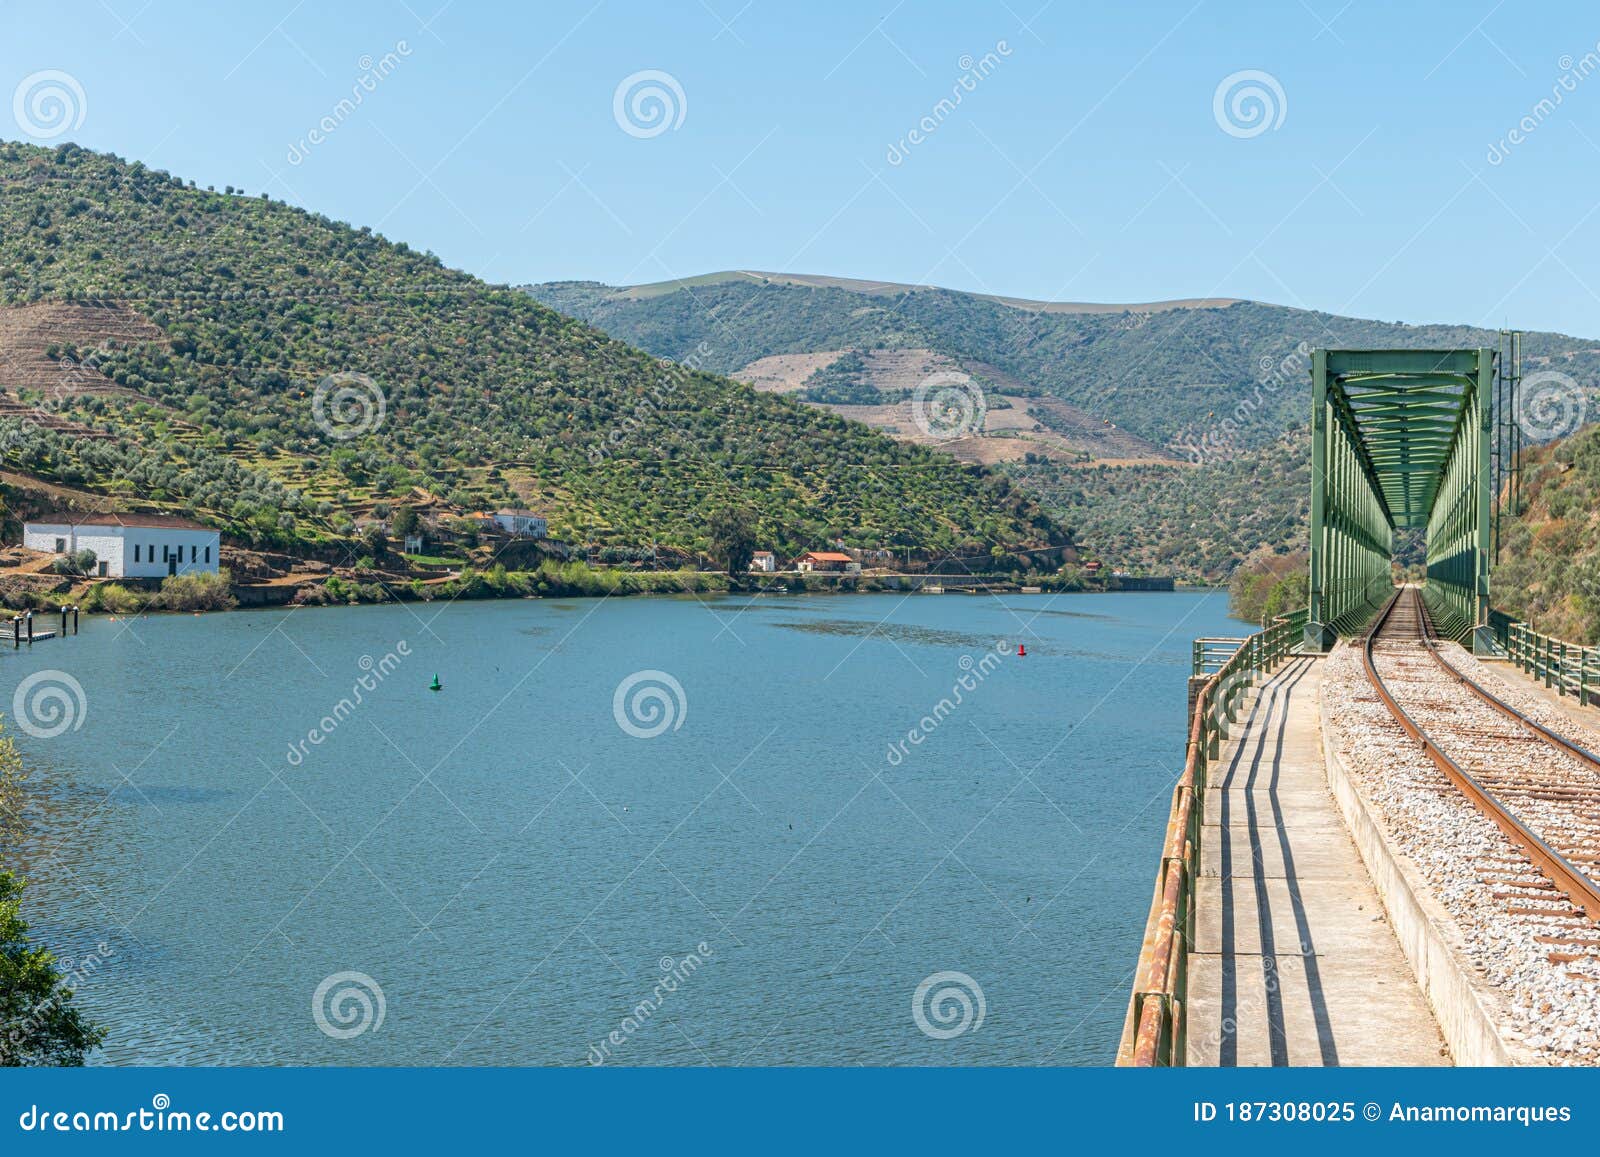 douro valley view near the ferradosa bridge at sao xisto located in vale de figueira, sao joao da pesqueira municipality, the